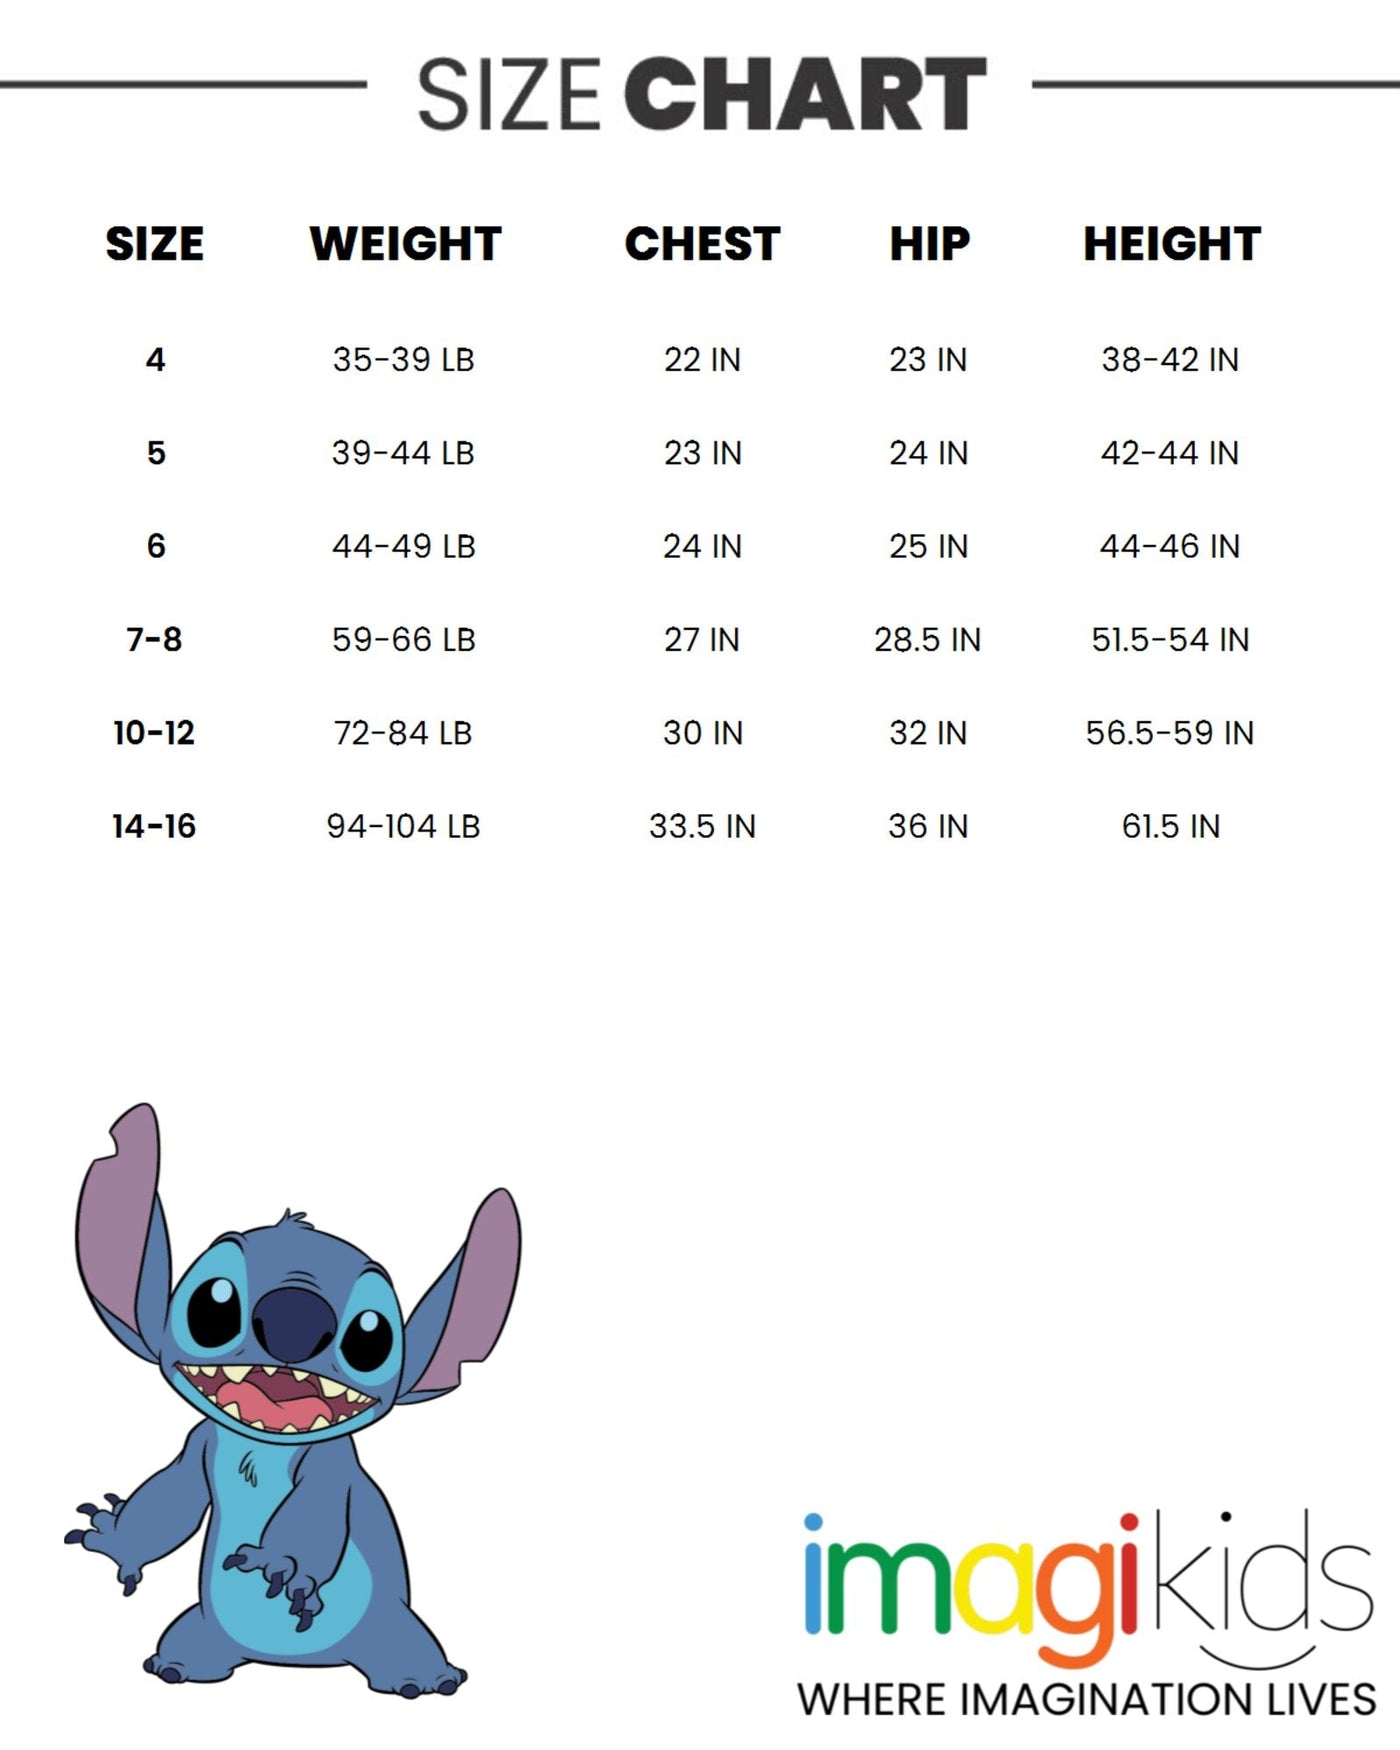 Disney Lilo & Stitch Chambray Skater Dress - imagikids